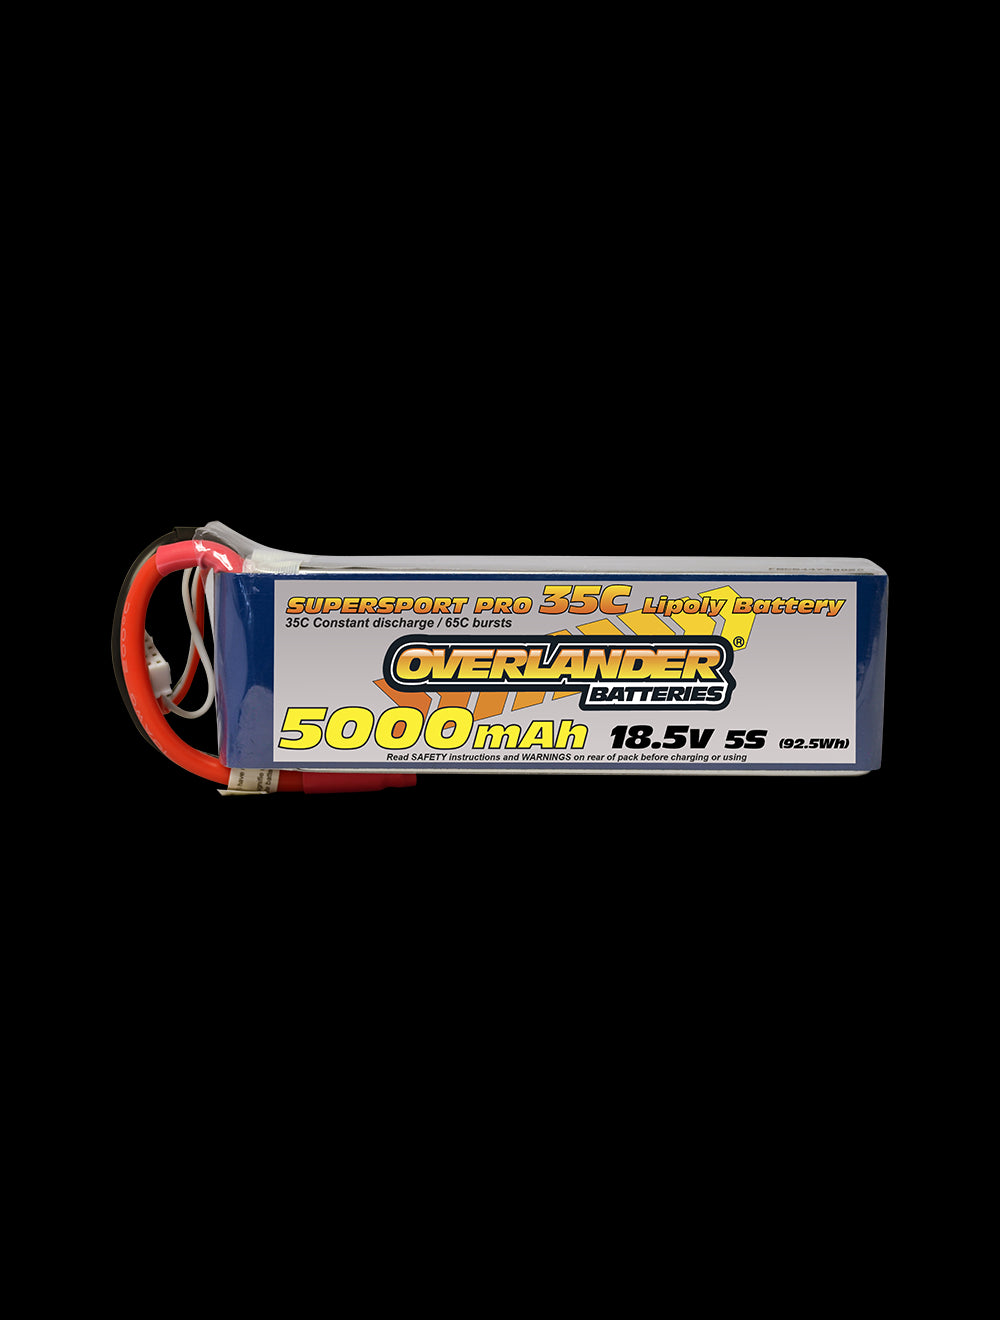 Overlander 5000mAh 18.5V 5S 35C Supersport Pro LiPo Battery - Traxxas Connector 2579